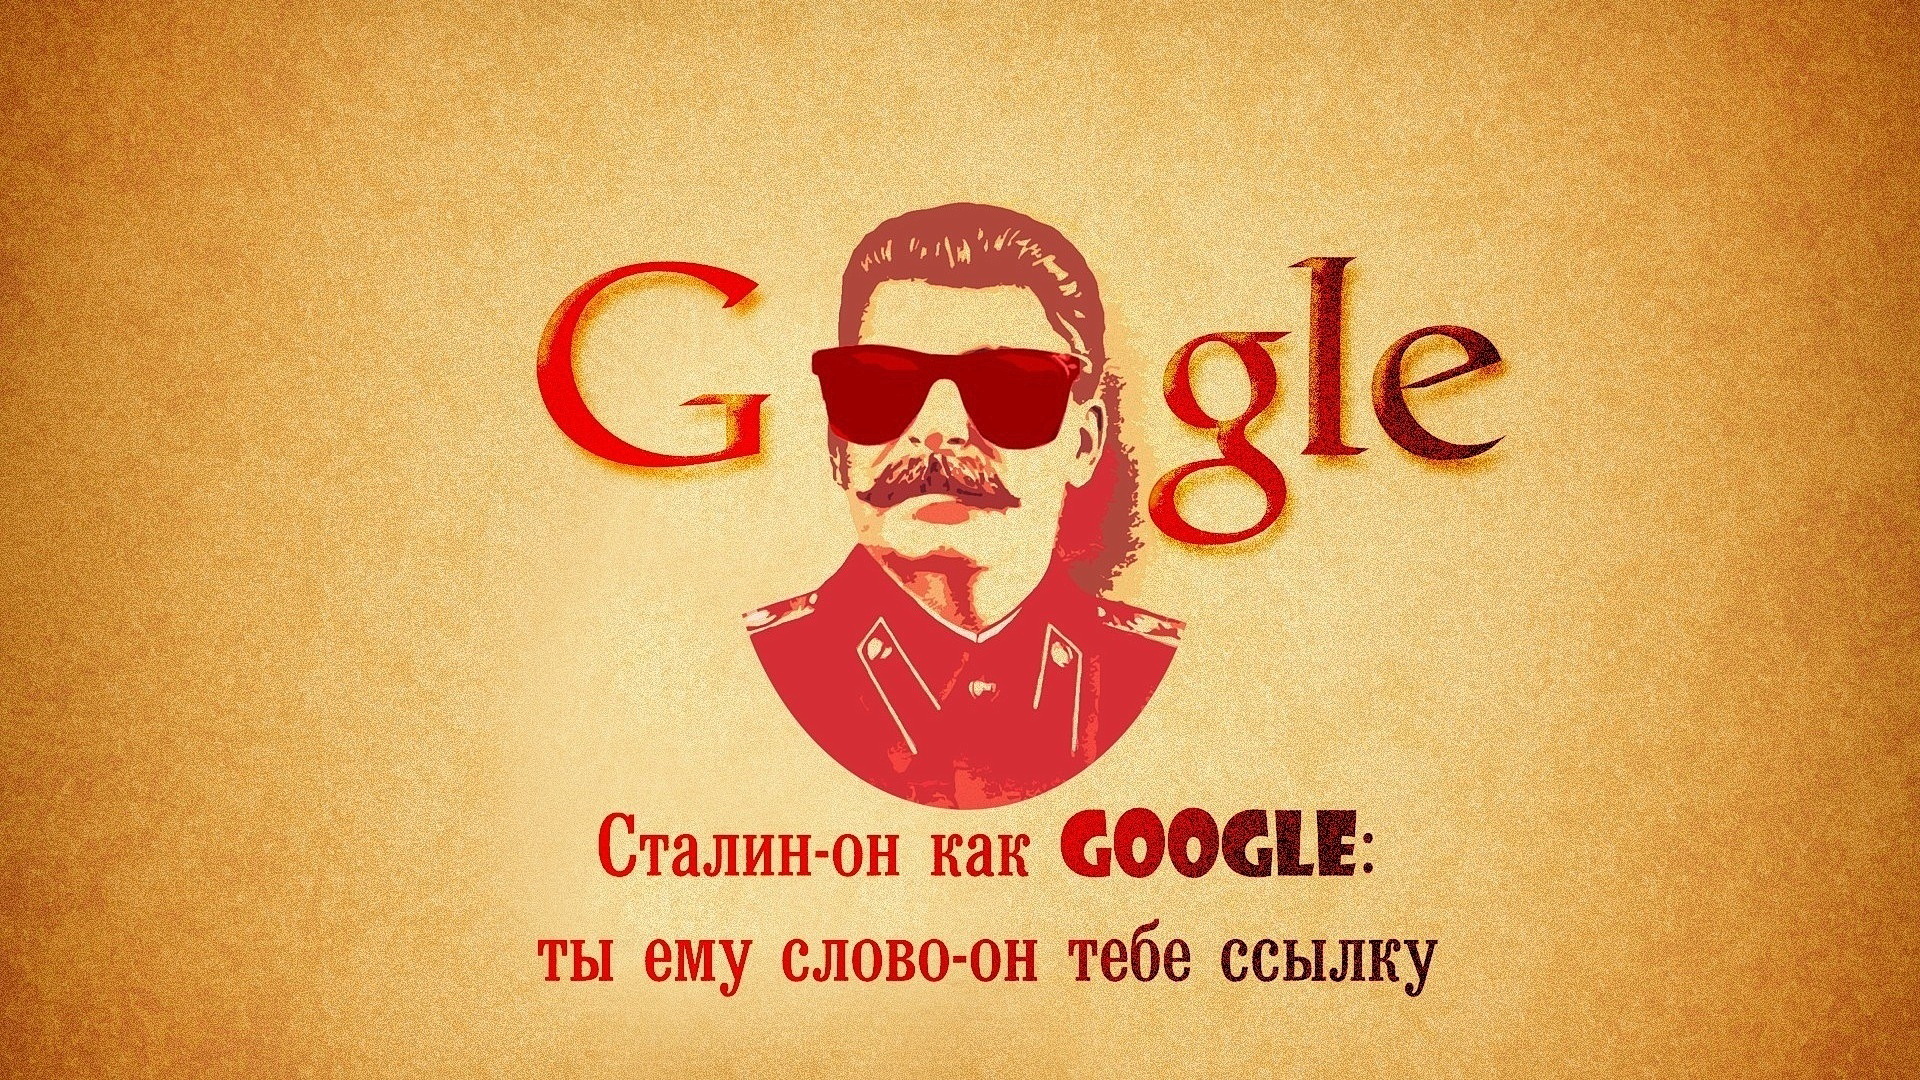 Google and Stalin